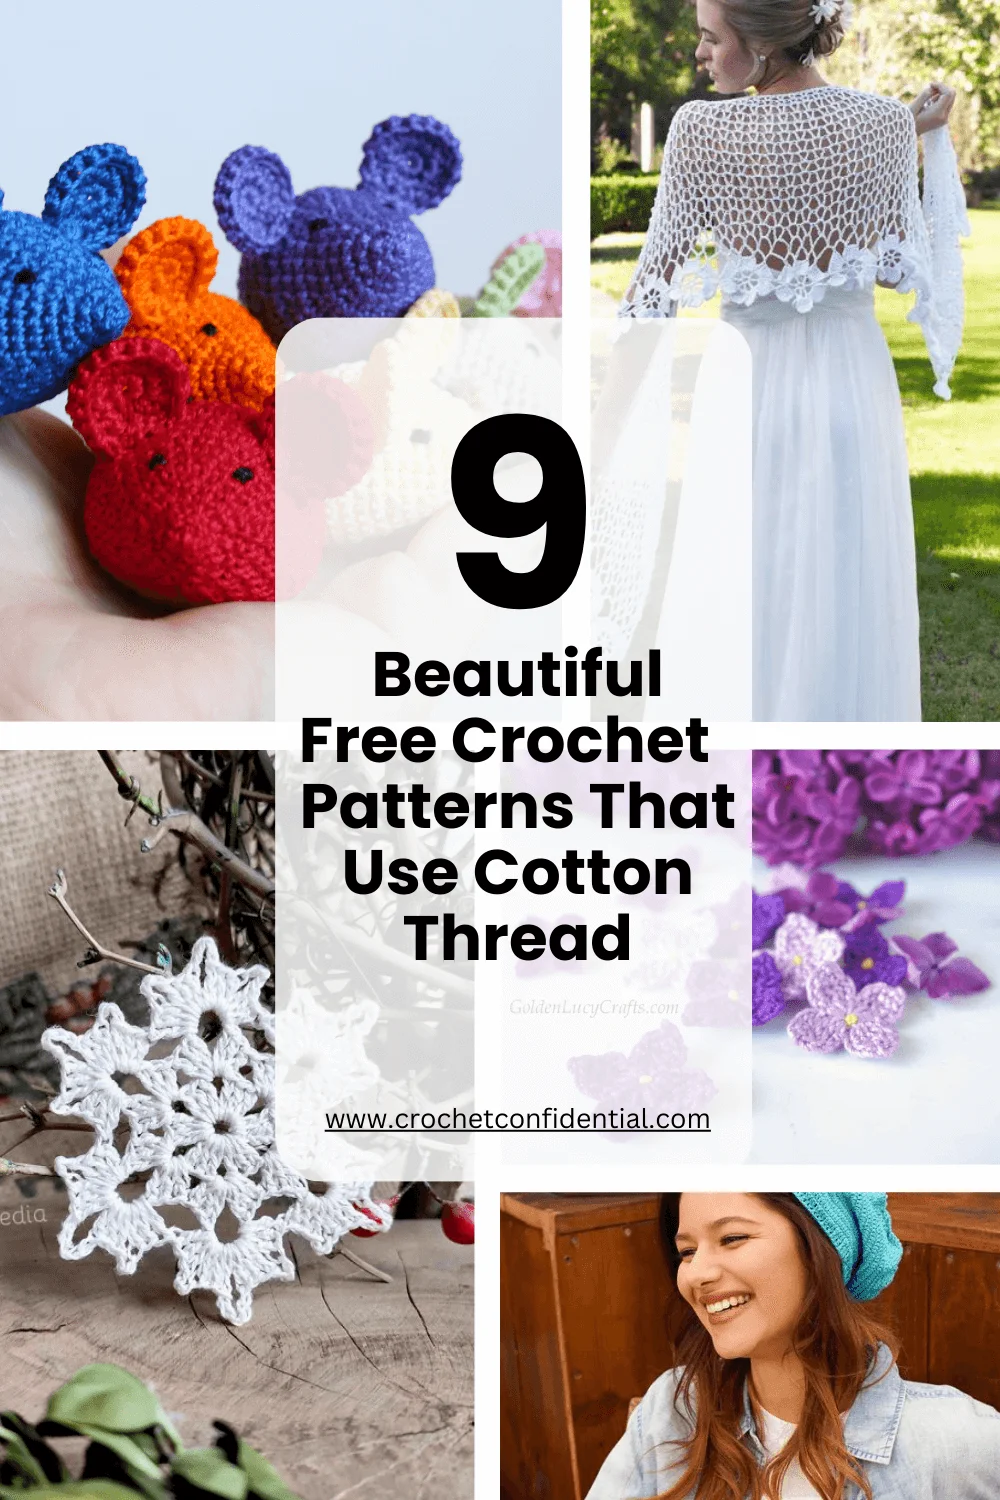 10 Free Crochet Accessory Patterns - Crochet It Creations